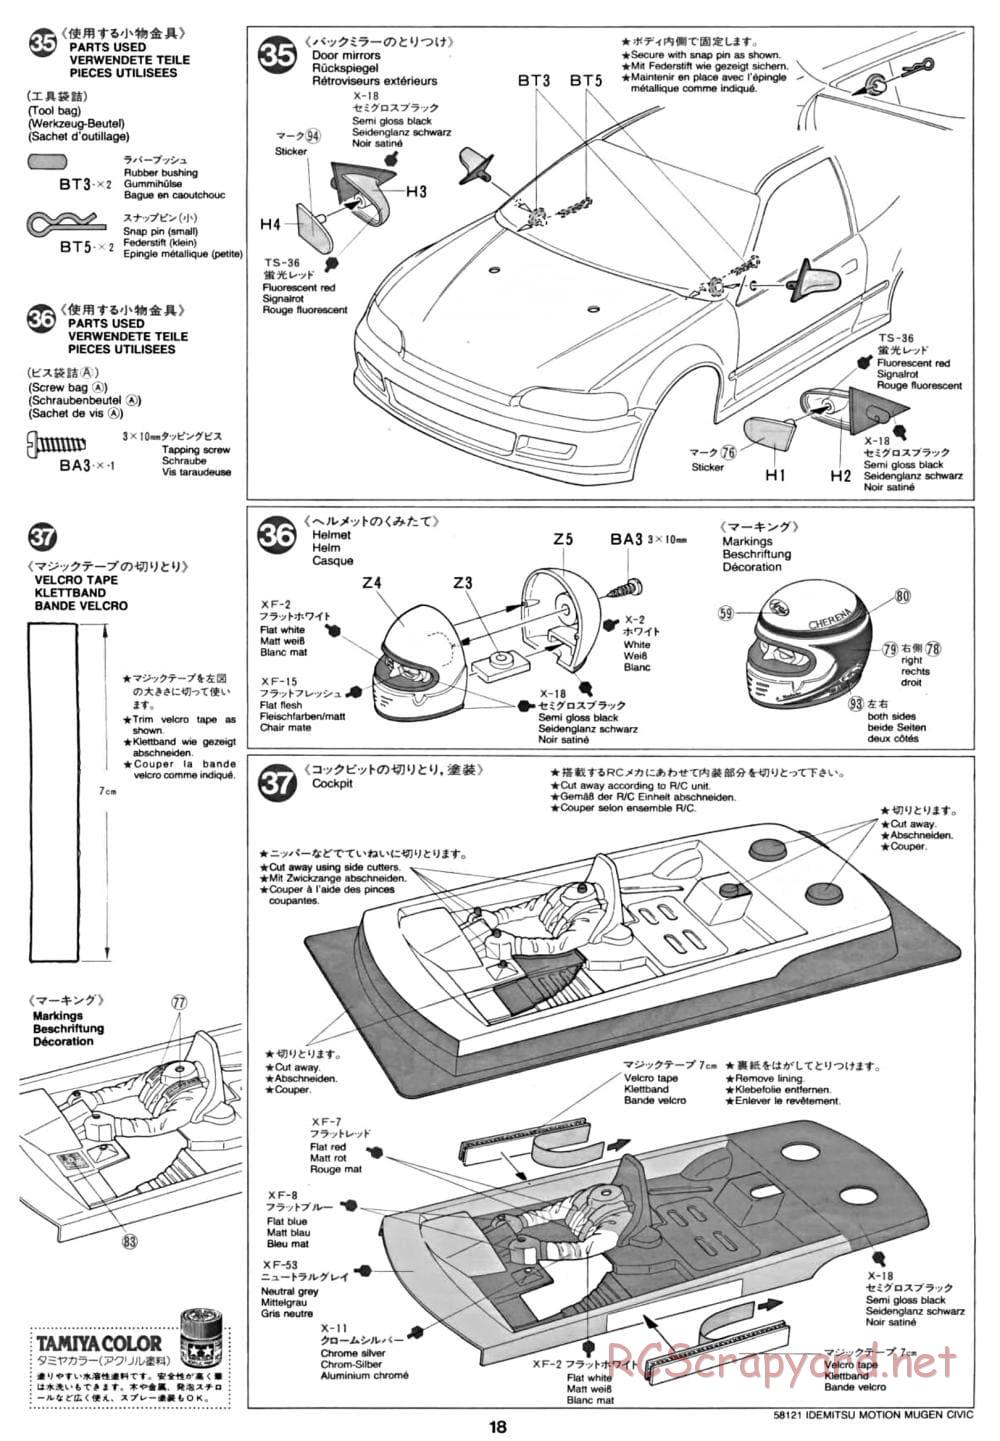 Tamiya - Idemitsu Motion Mugen Civic - FF-01 Chassis - Manual - Page 18